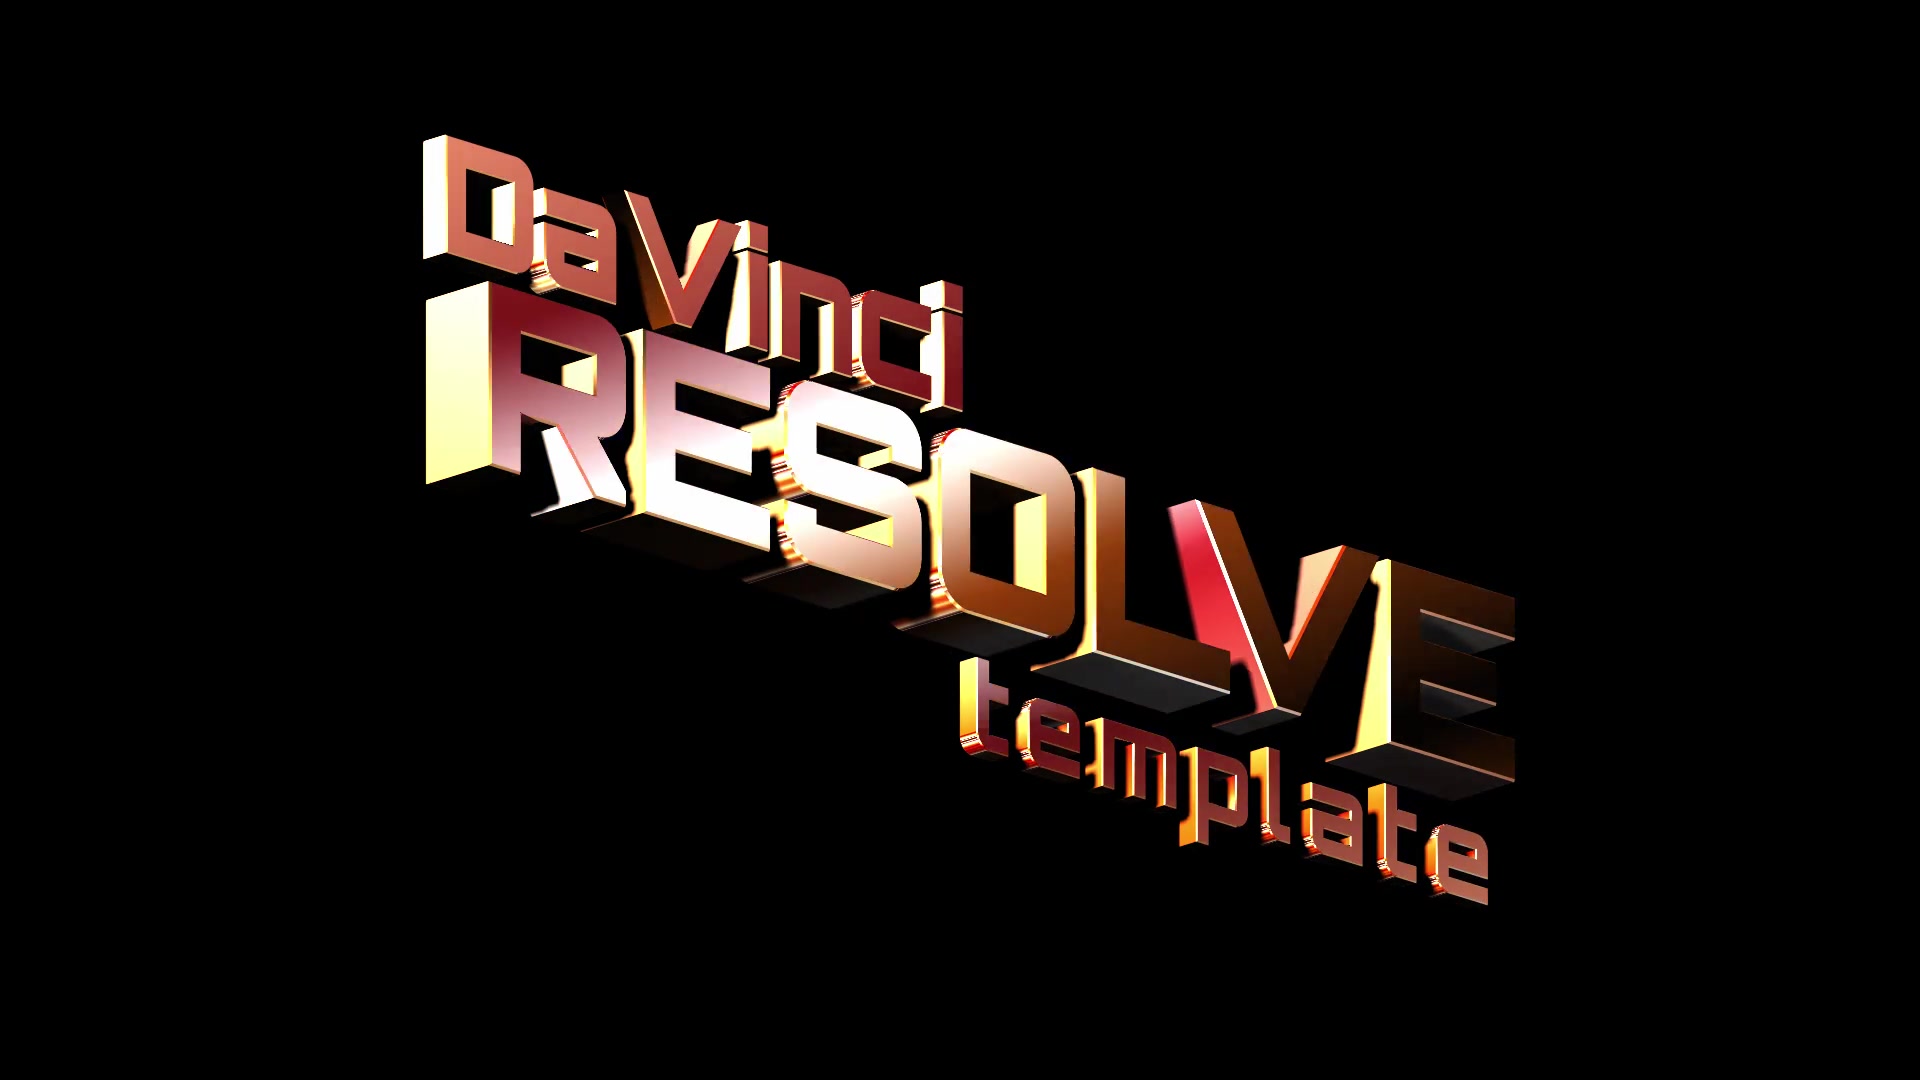 davinci resolve template projects